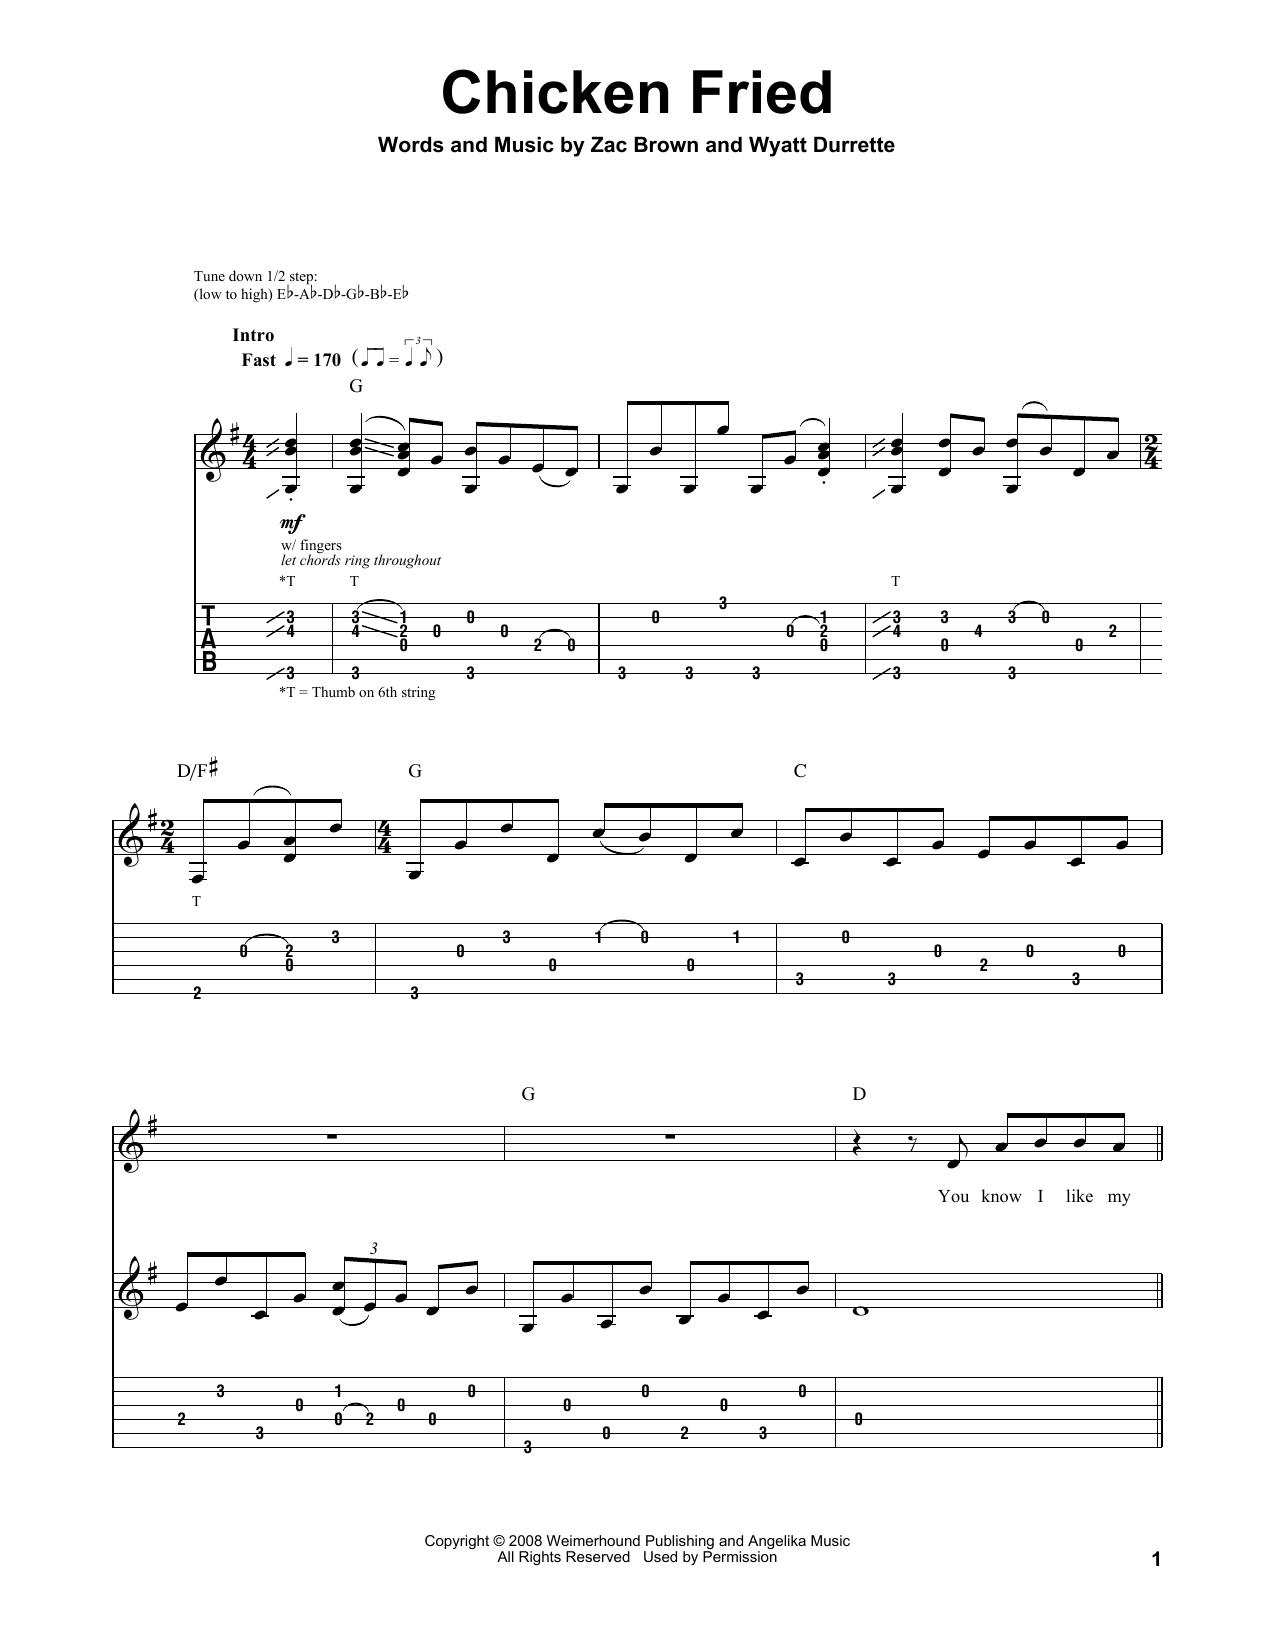 Colder Weather Chords Sheet Music Digital Files To Print Licensed Zac Brown Band Digital